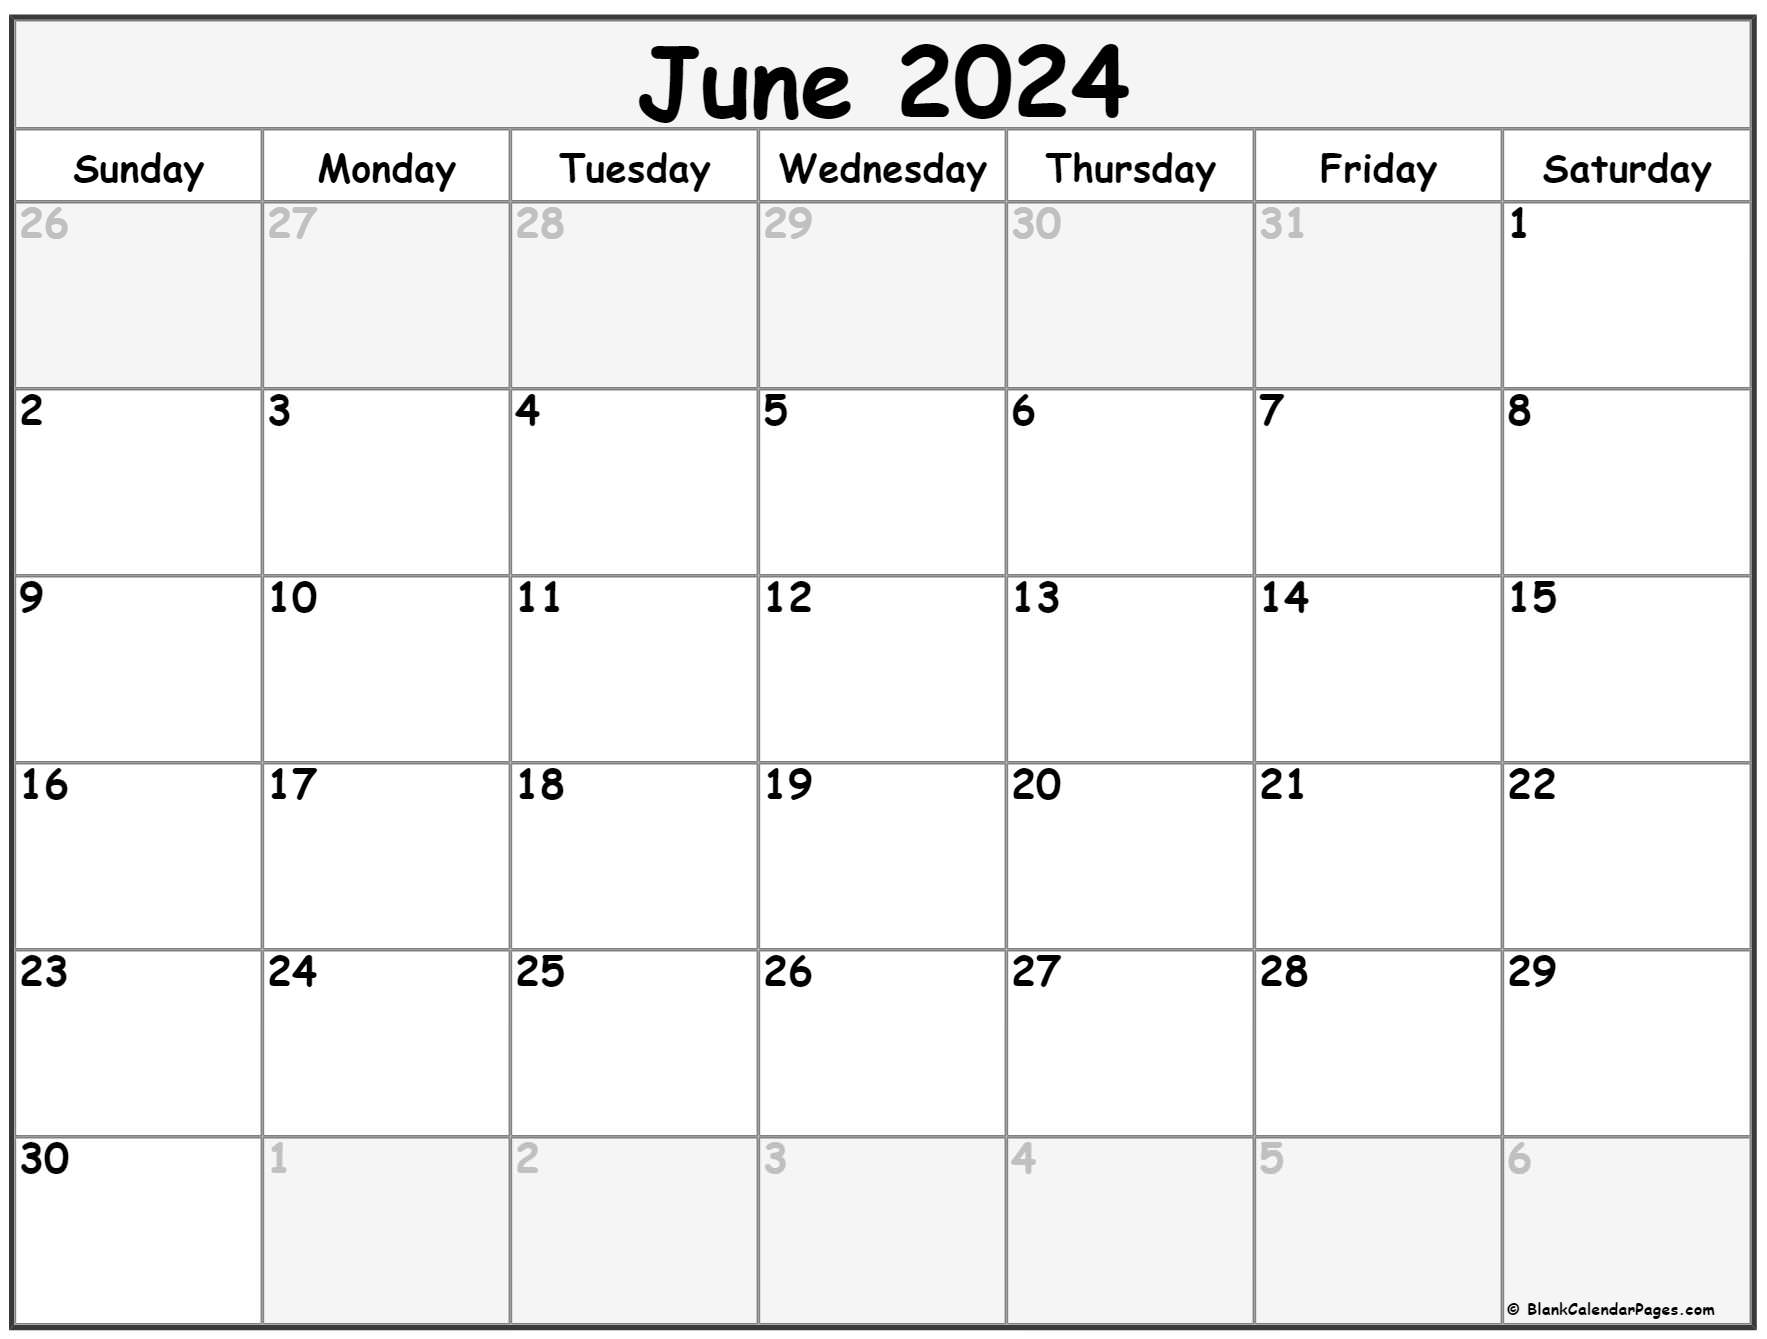 June 2024 Calendar | Free Printable Calendar for Printable Calendar 2024 June